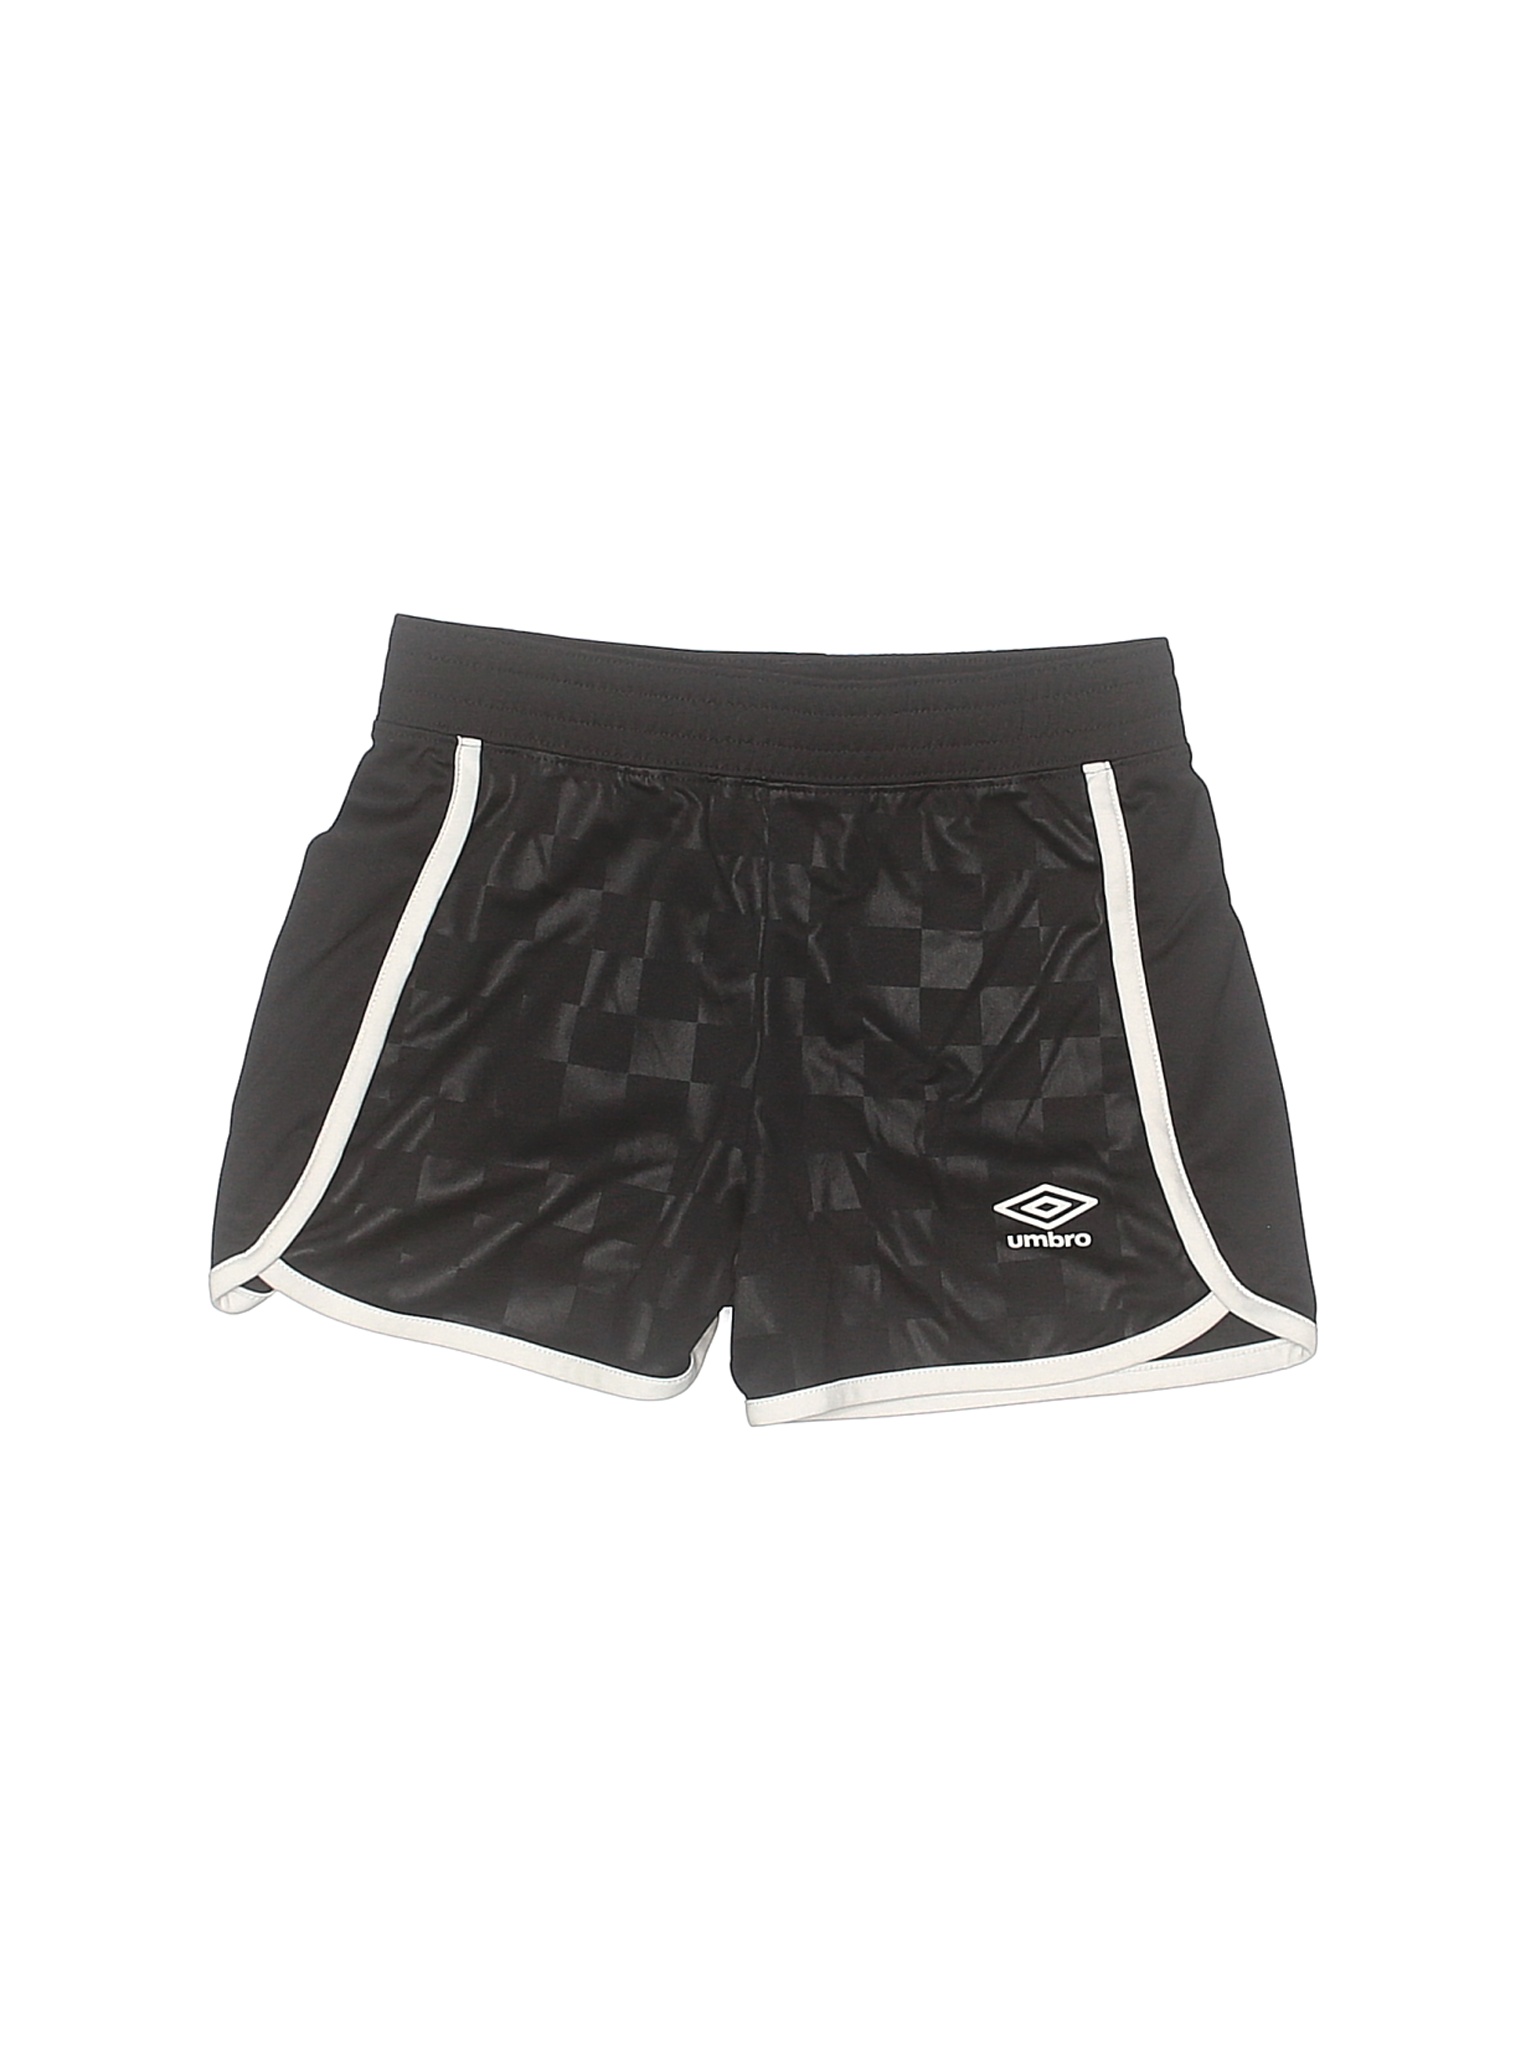 Umbro Girls Black Athletic Shorts 7 | eBay